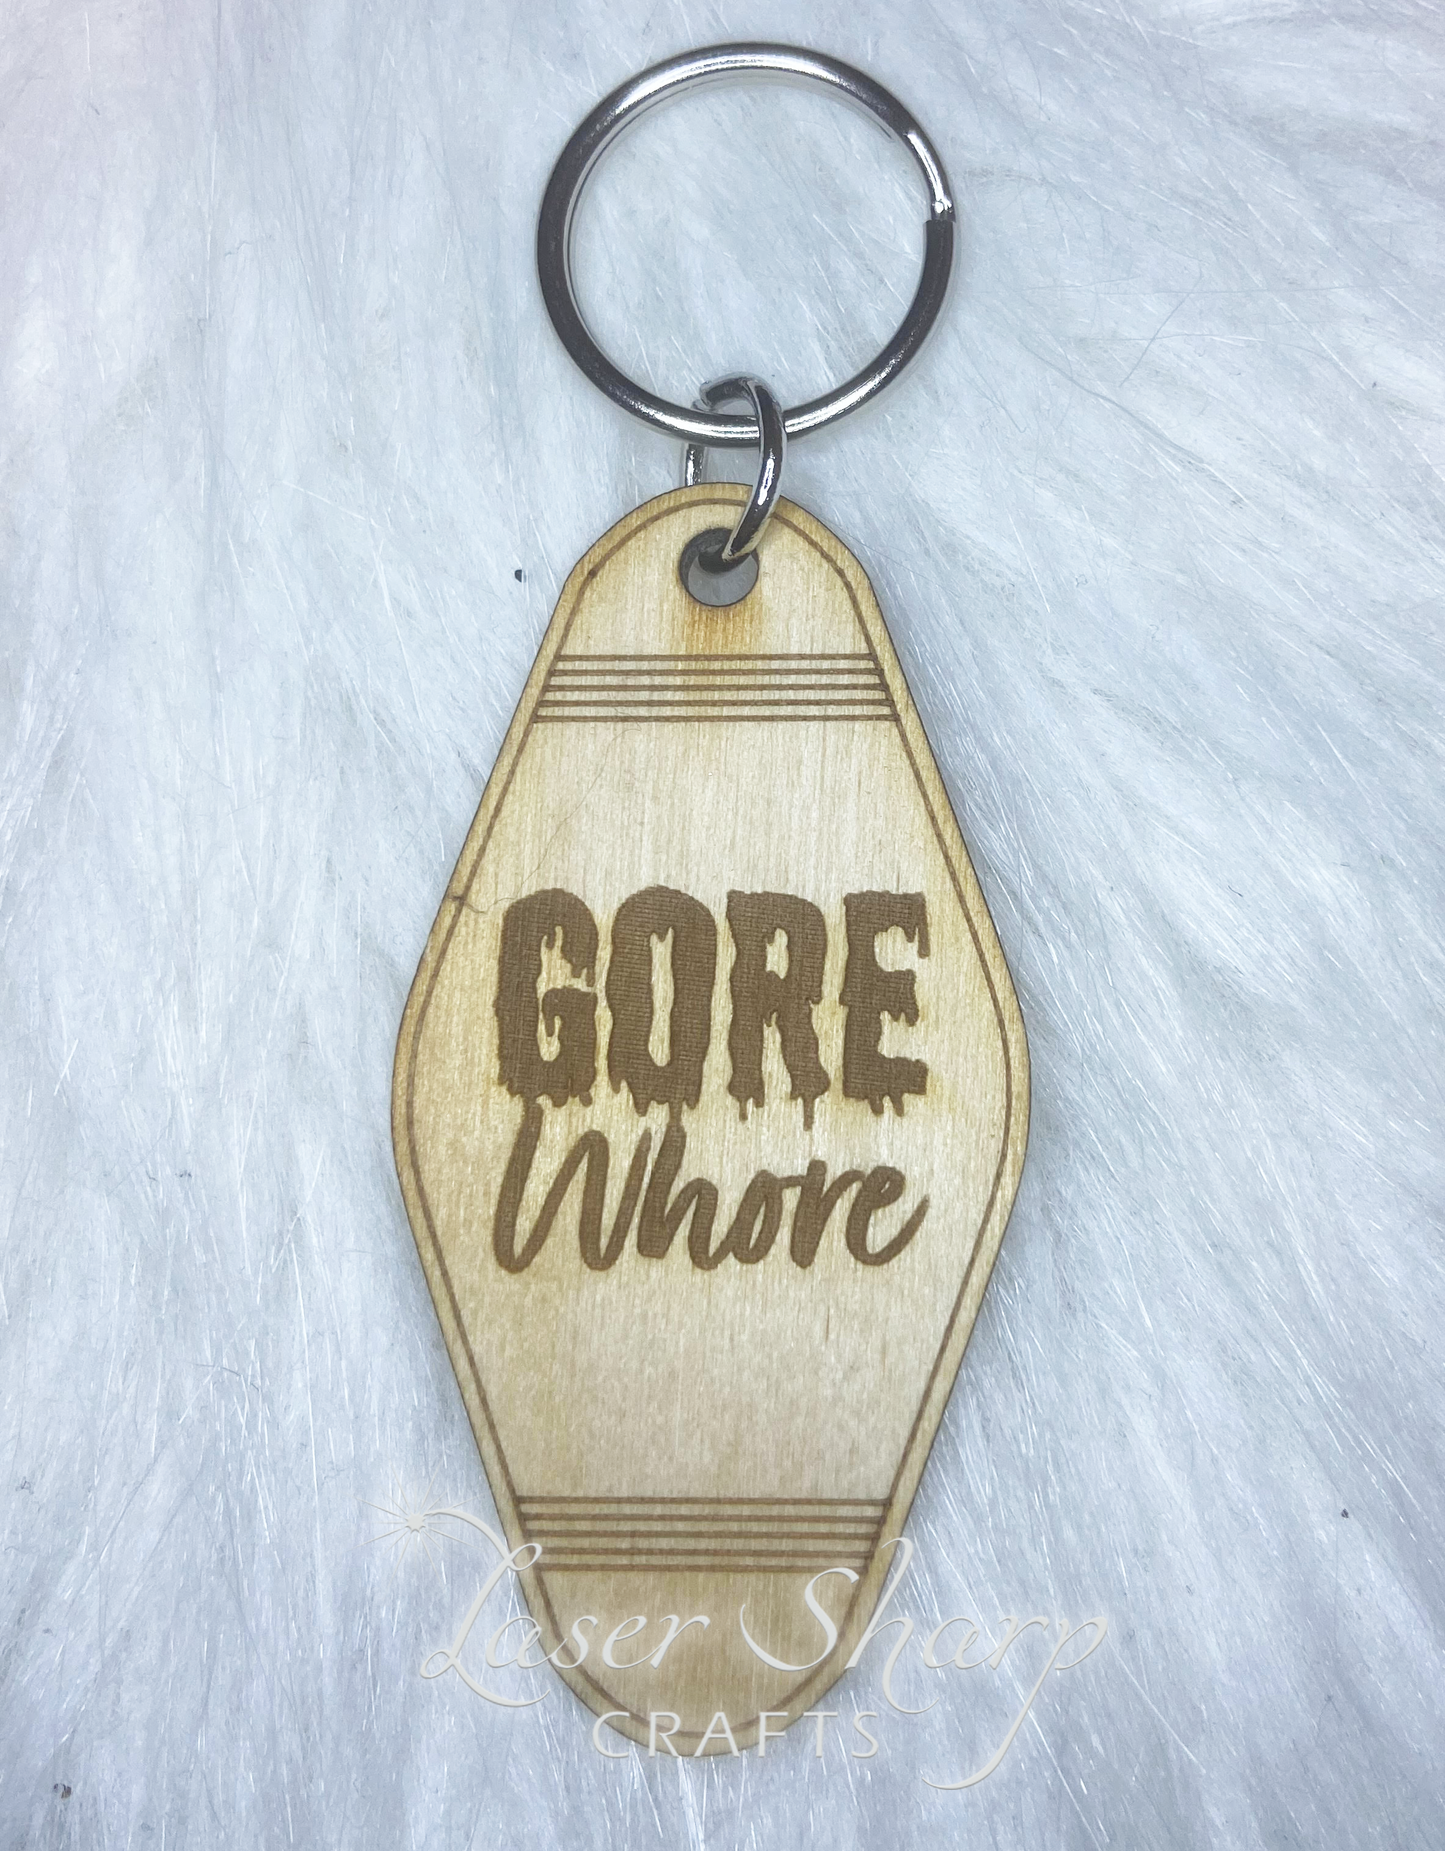 Gore Whore Keychain